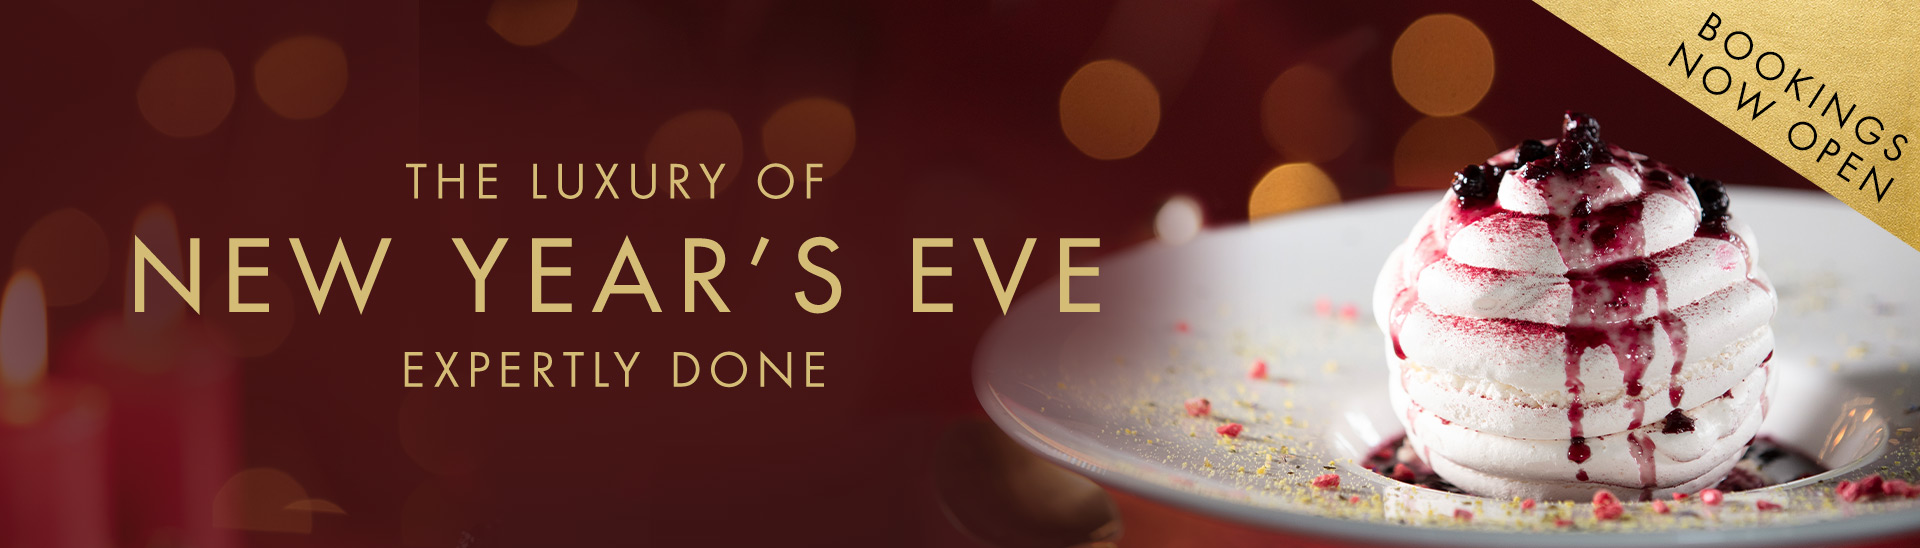 New Year’s Eve Menu at Miller & Carter Exeter • Book Now